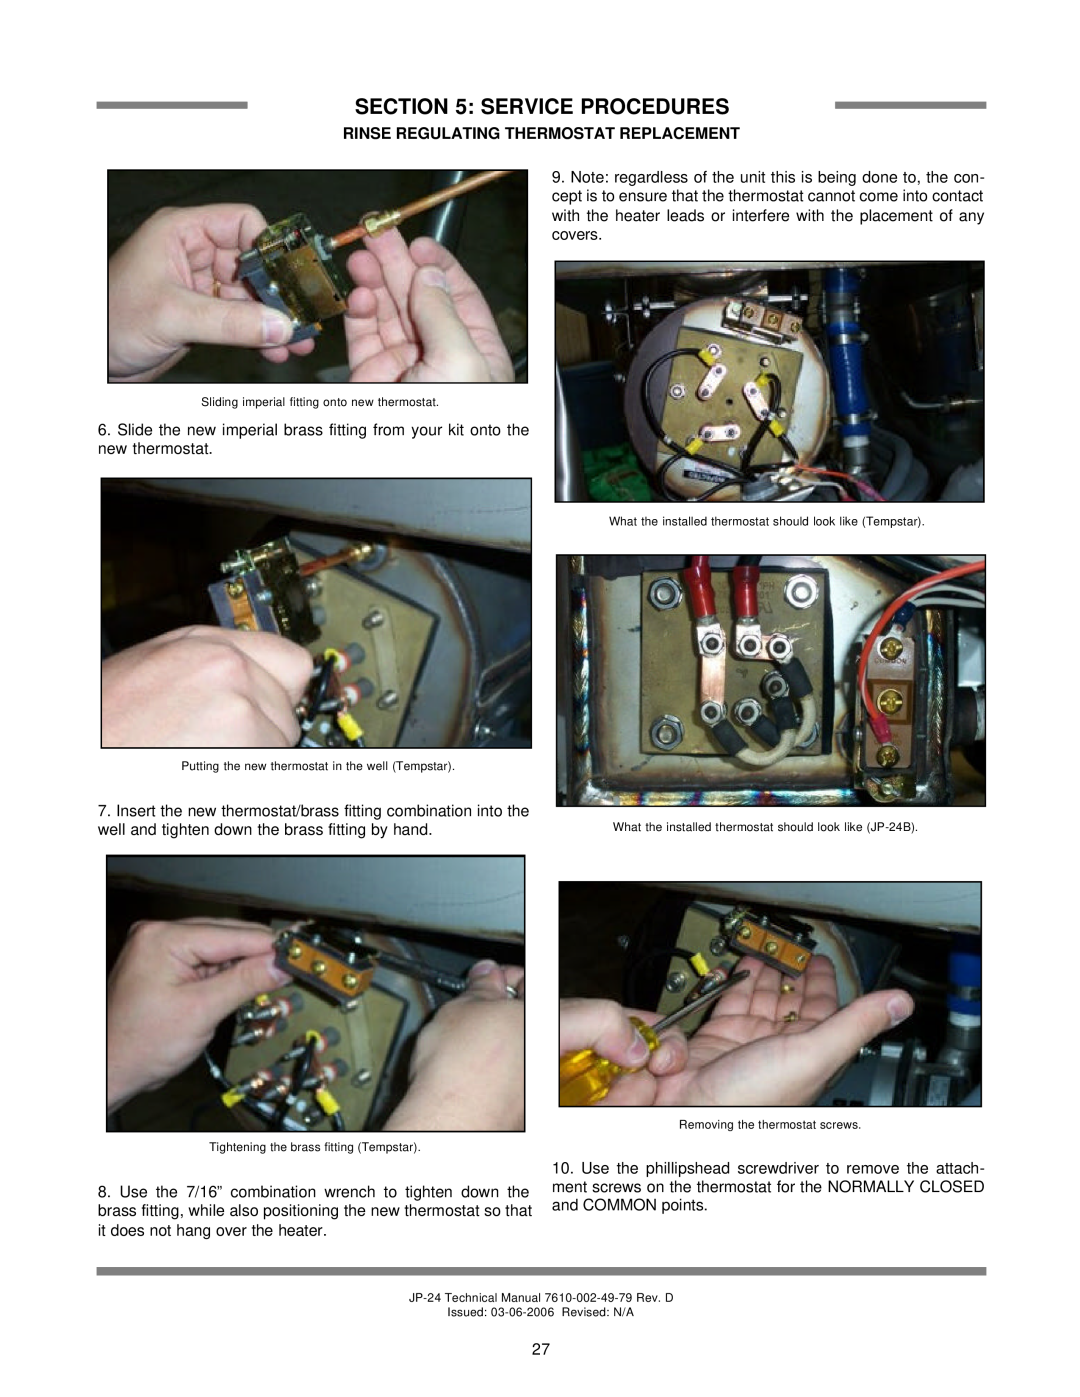 Jackson jp-24b, JP-24BF, JP-24F technical manual Service Procedures, Rinse Regulating Thermostat Replacement 